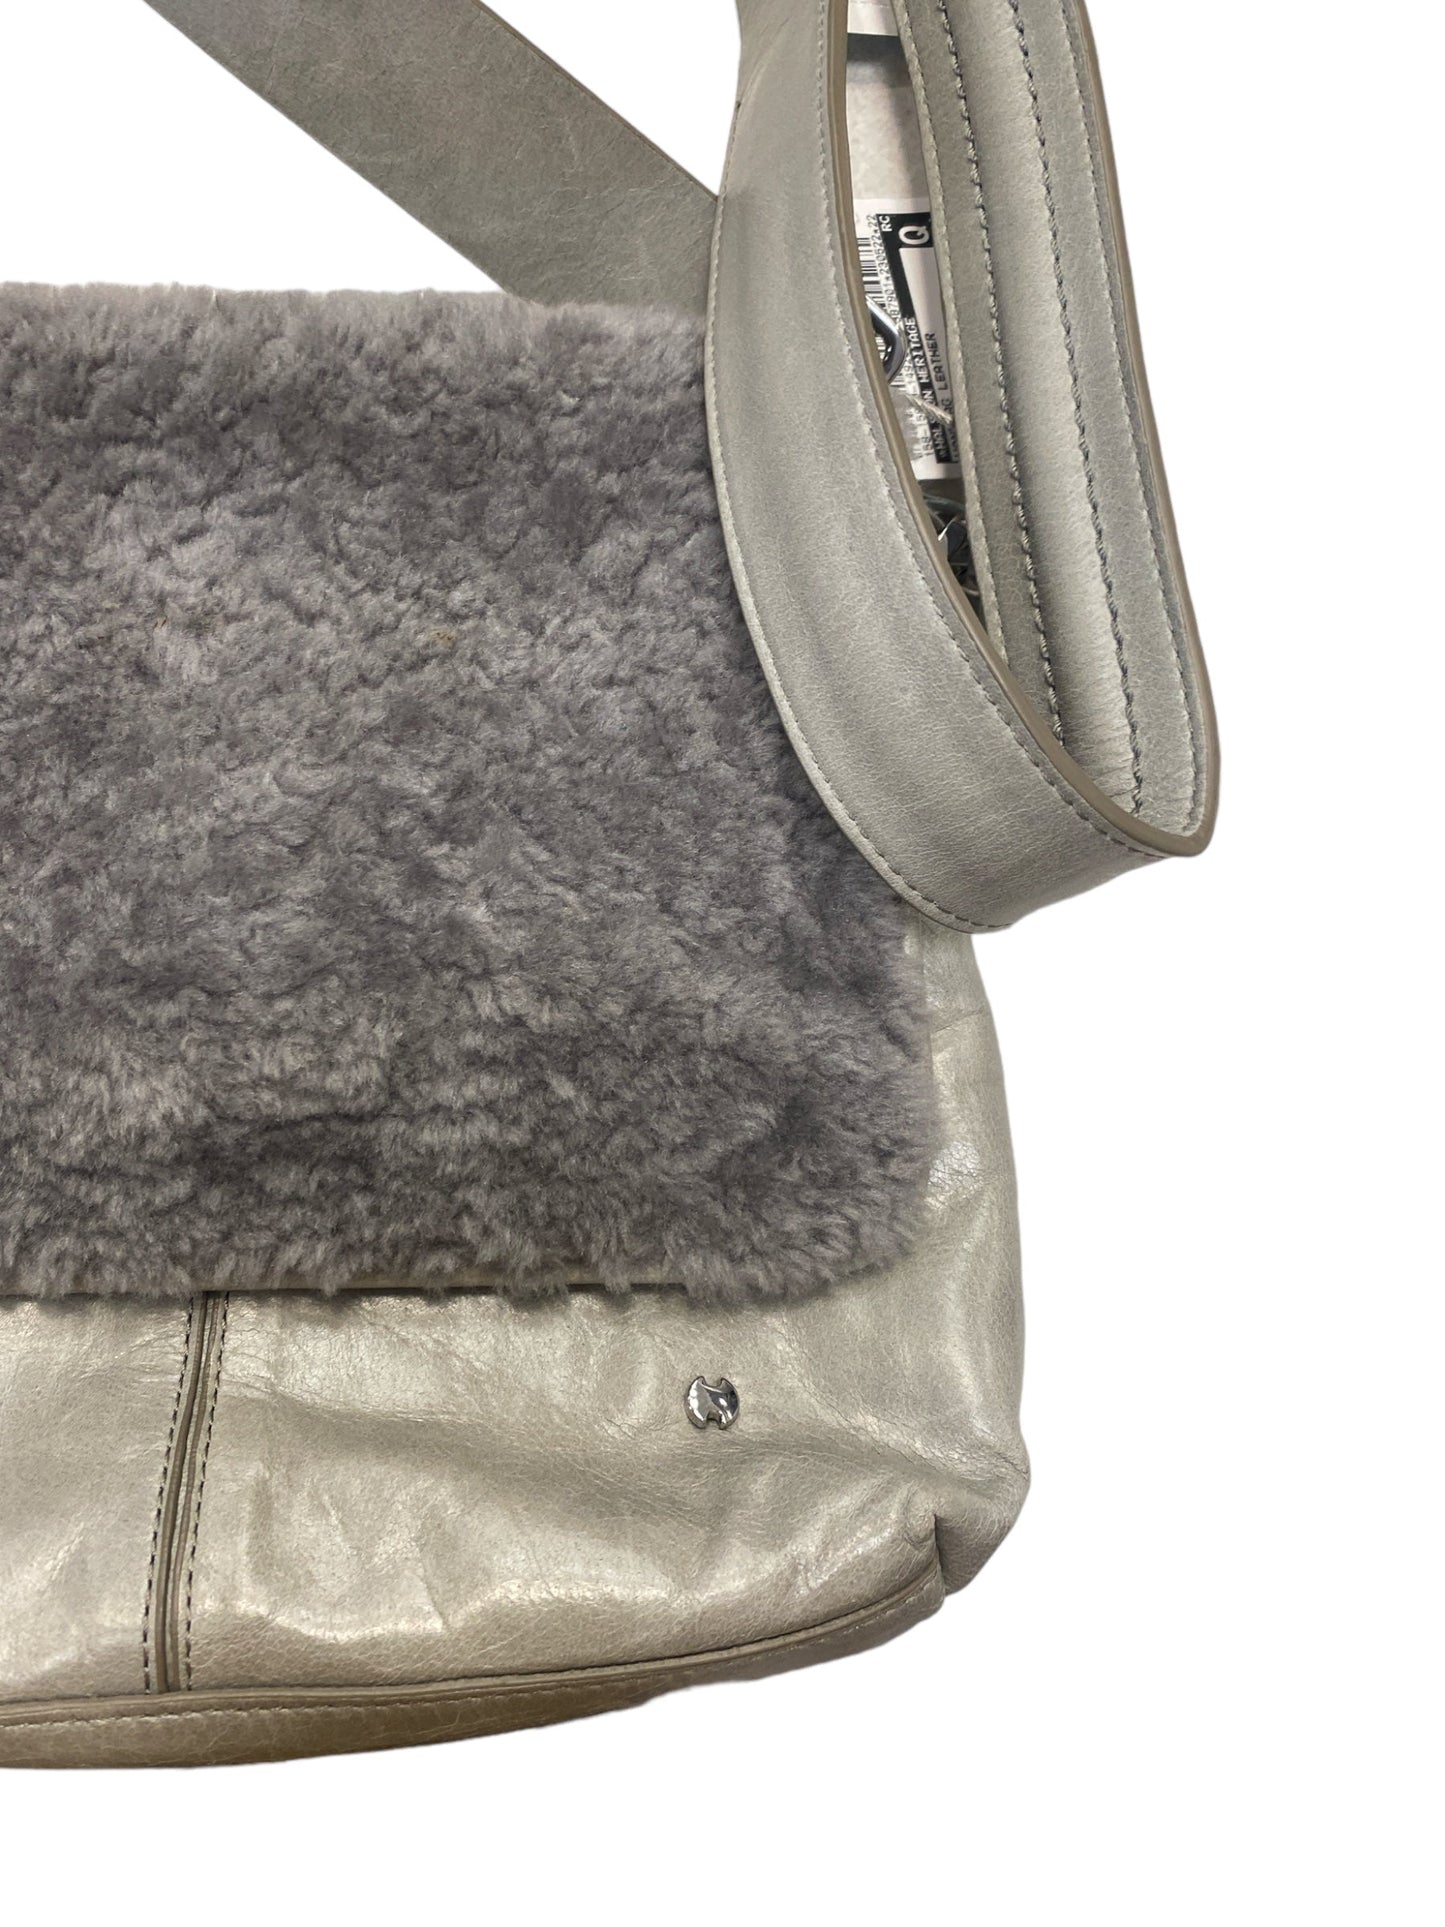 Handbag Leather By Halston Heritage  Size: Small